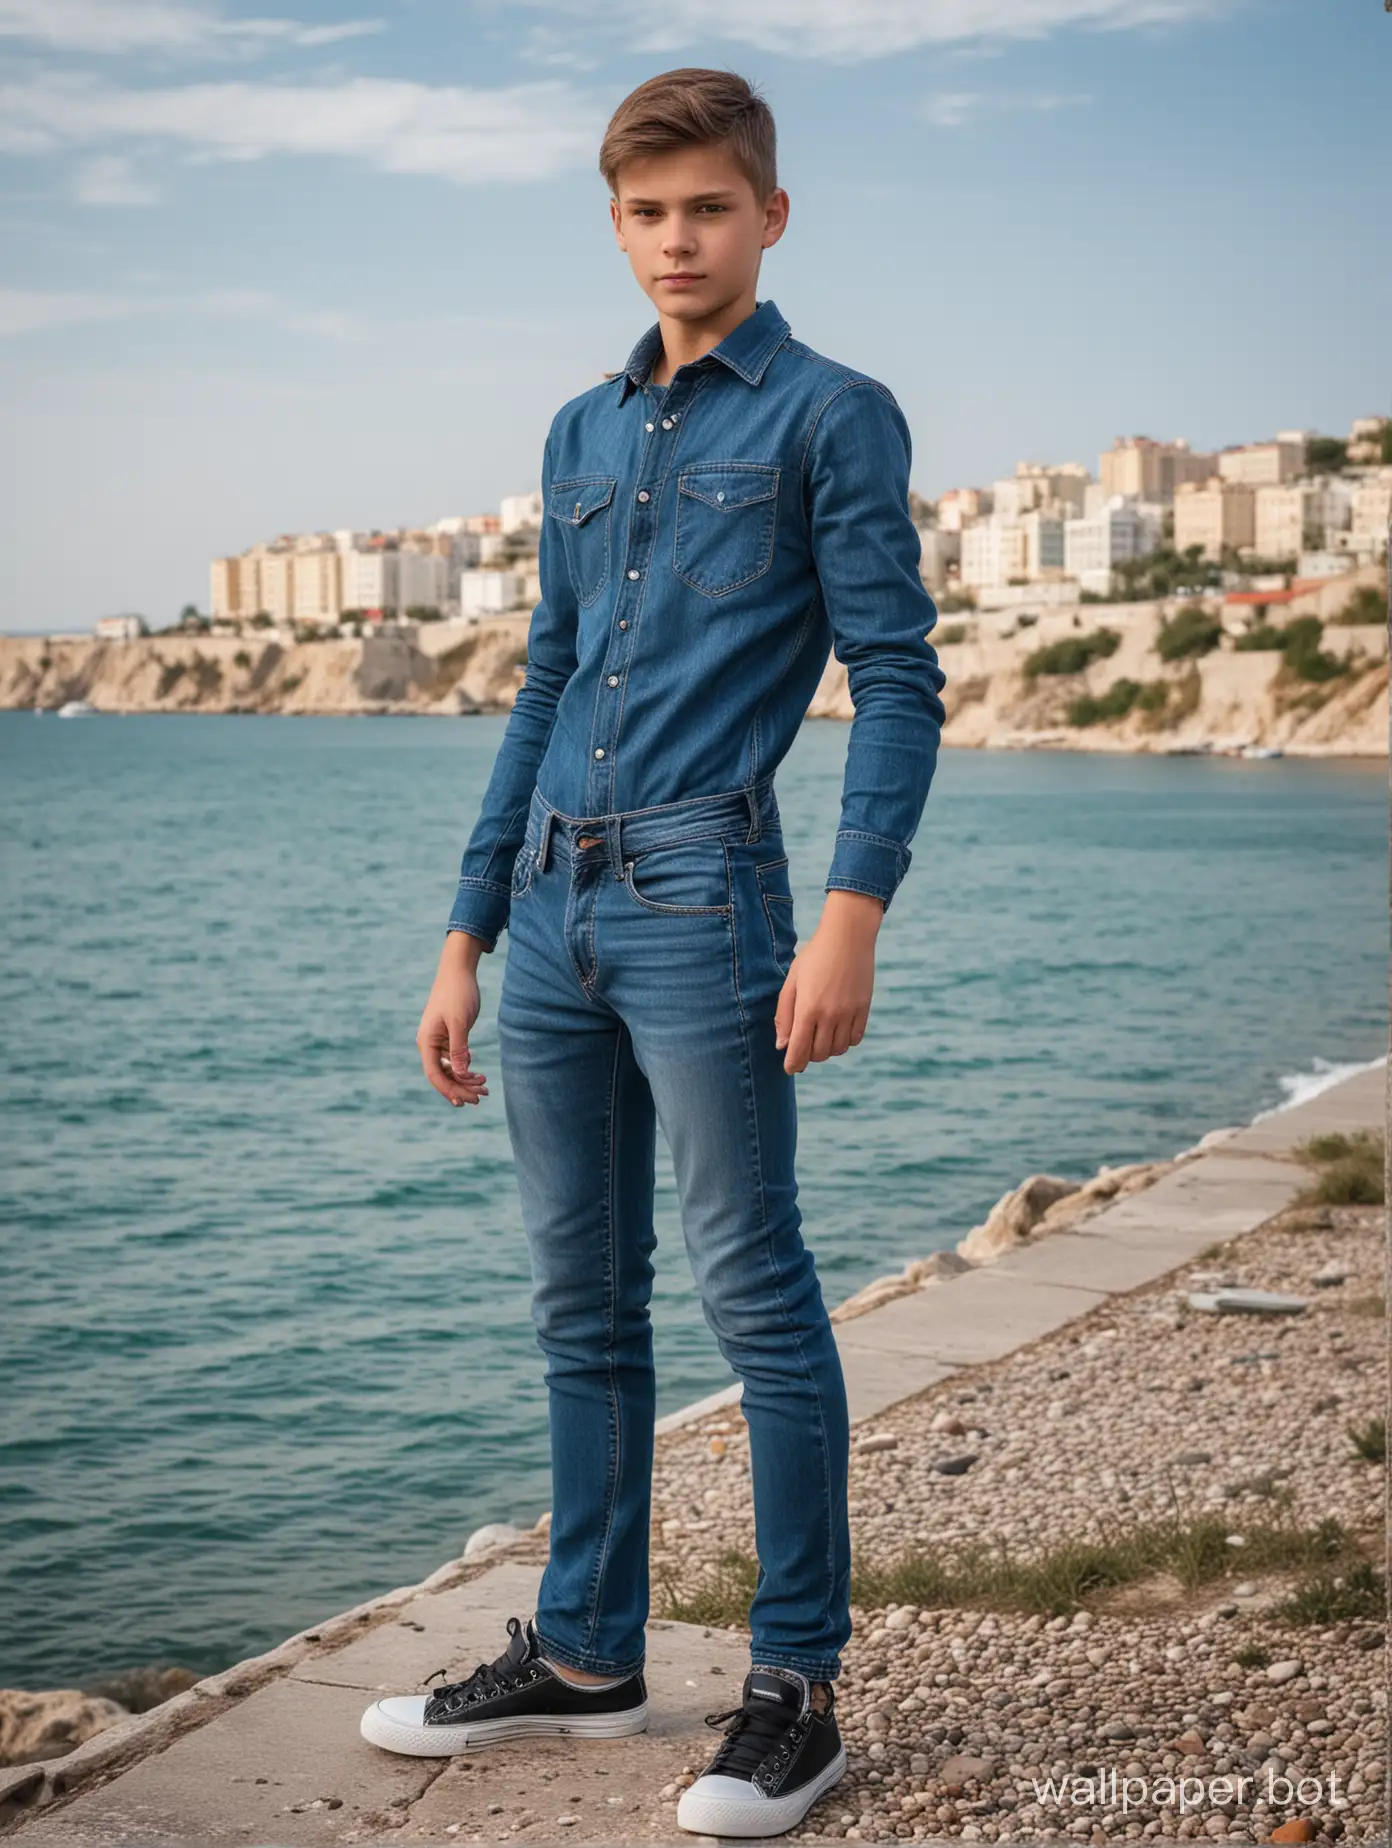 Youthful-Energy-13YearOld-Schoolboy-in-Crimeas-Coastal-Vibrance